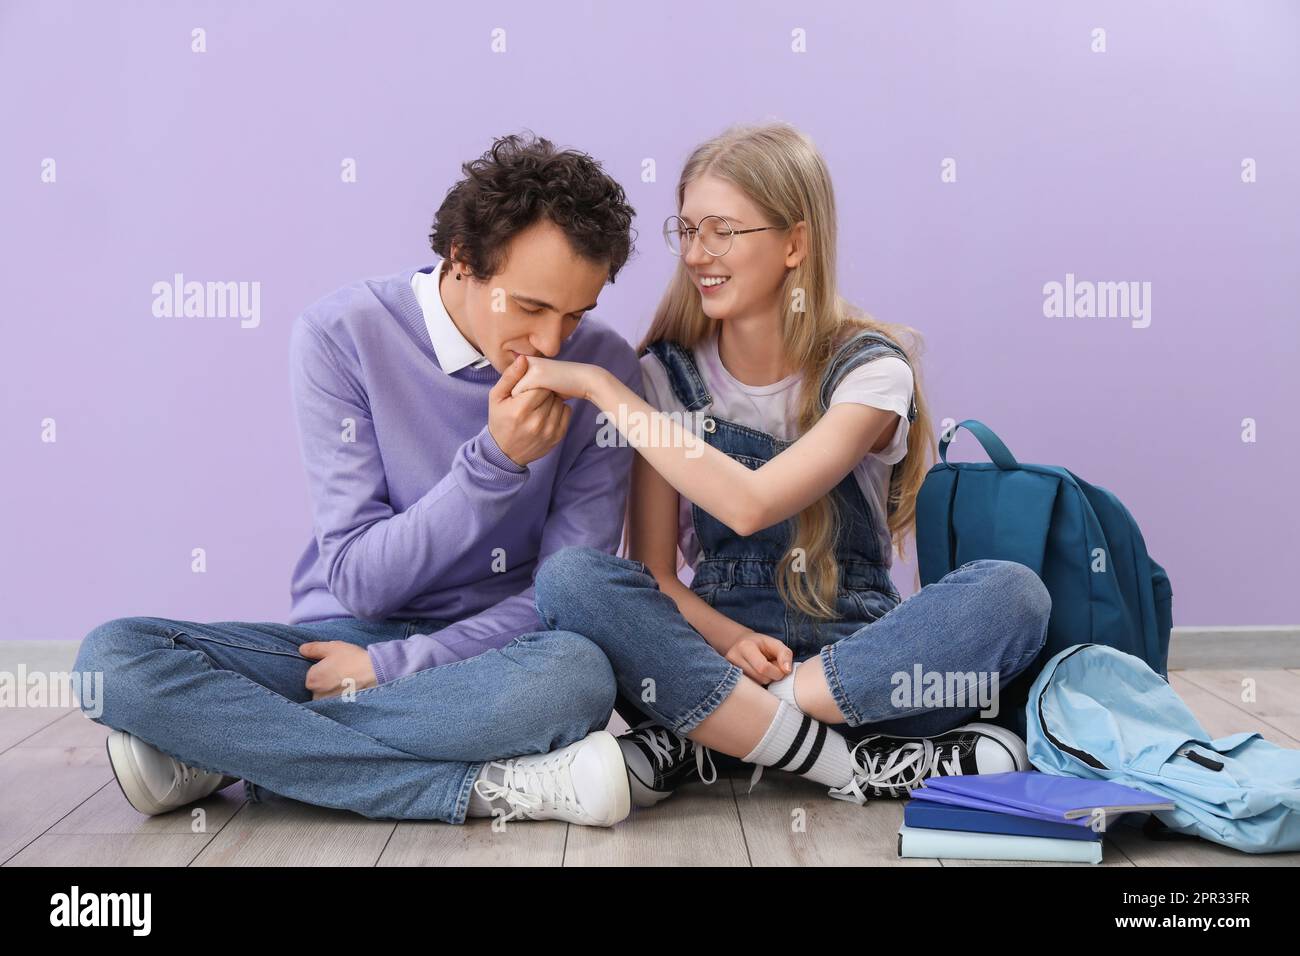 Teenage boy kissing his girlfriend's hand near lilac wall Stock Photo